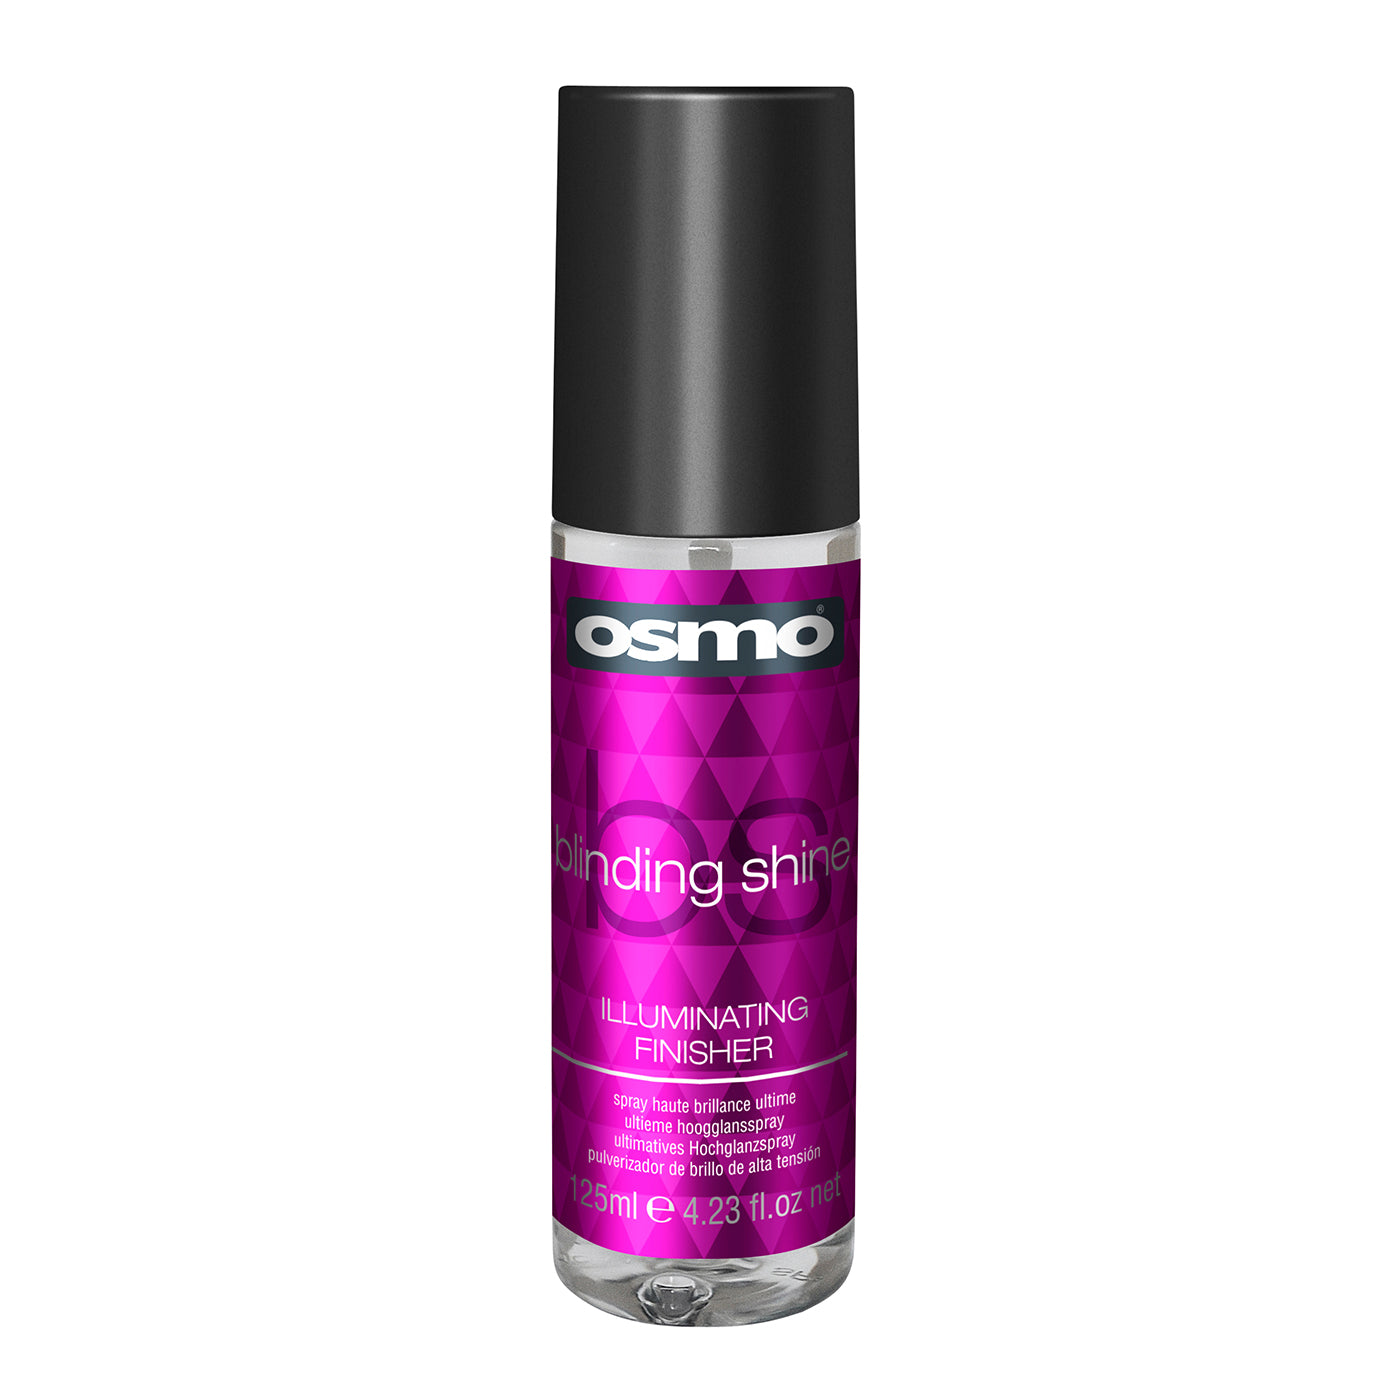 Osmo Blinding Shine Illuminating Finisher (125ml) - Ultimate Hair and Beauty